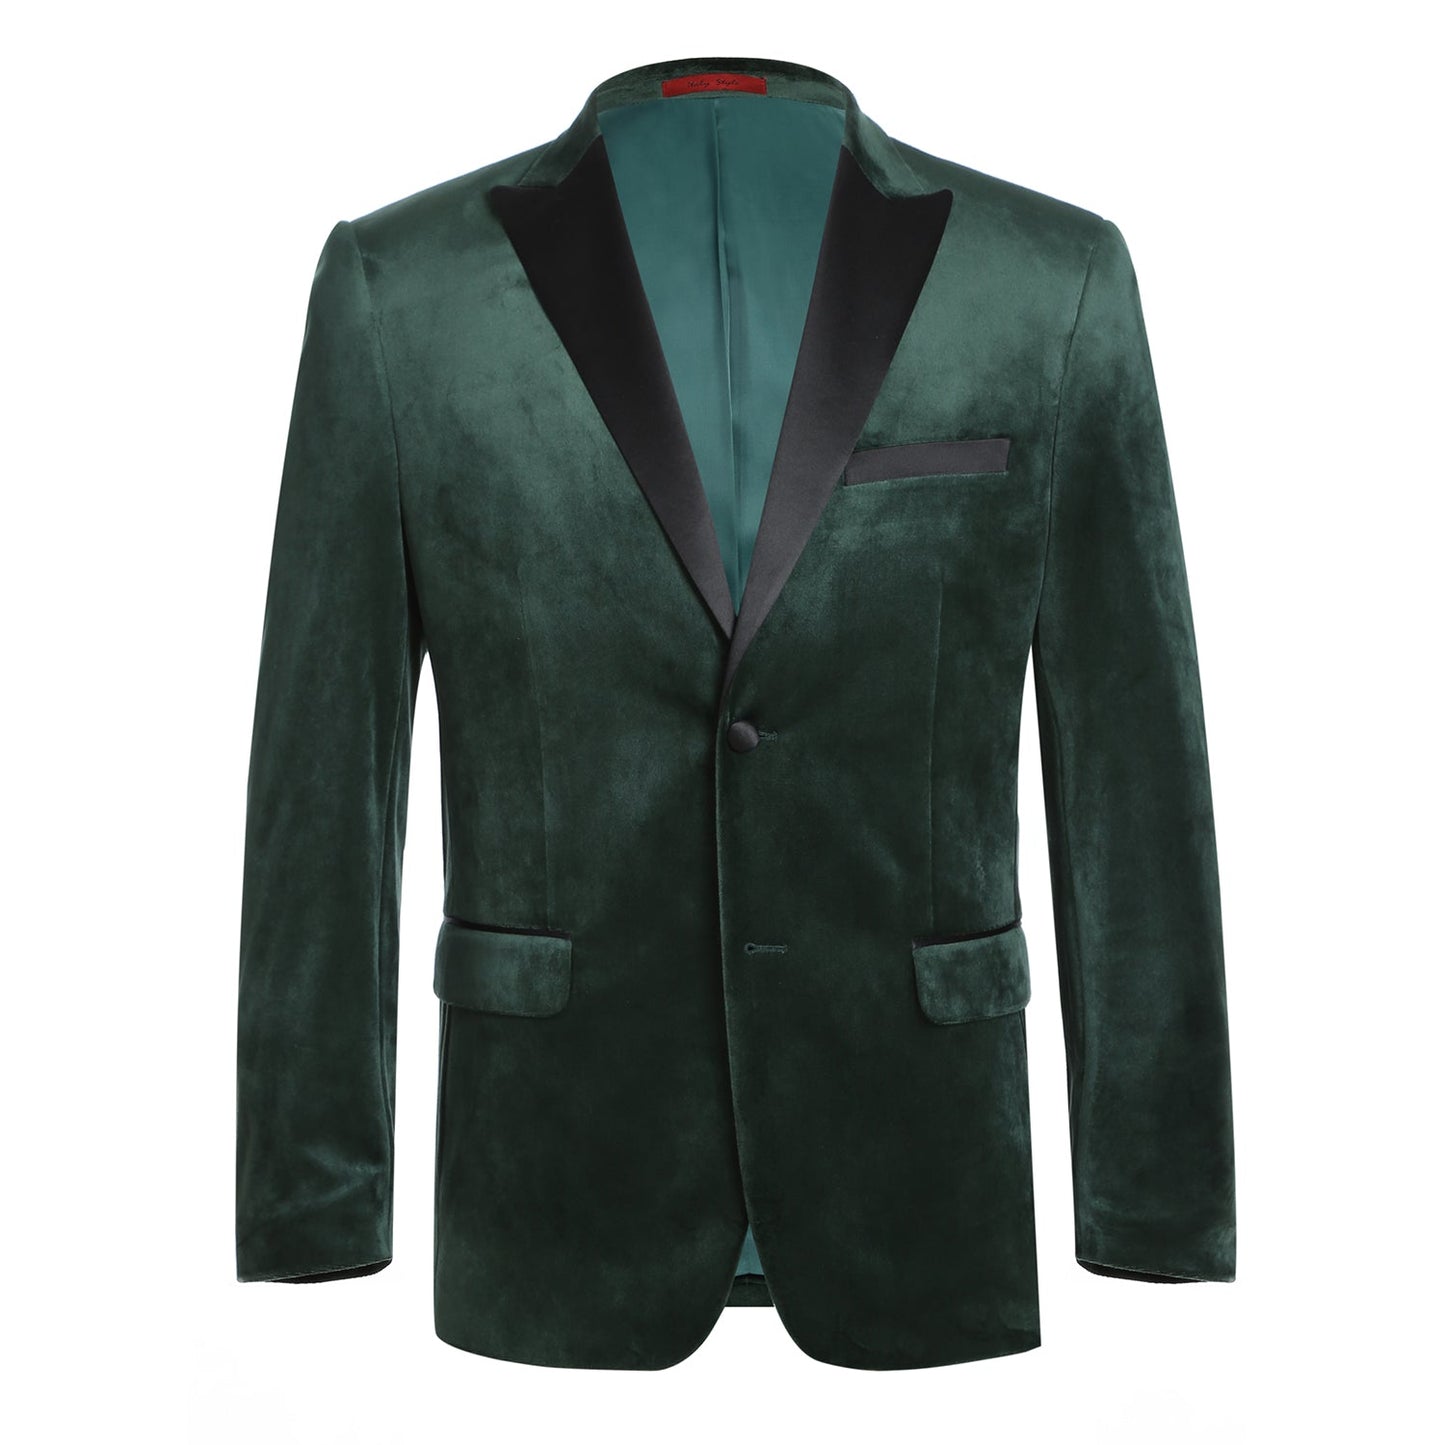 290-9 Men's Green Slim Fit Peak Lapel Tuxedo Jacket